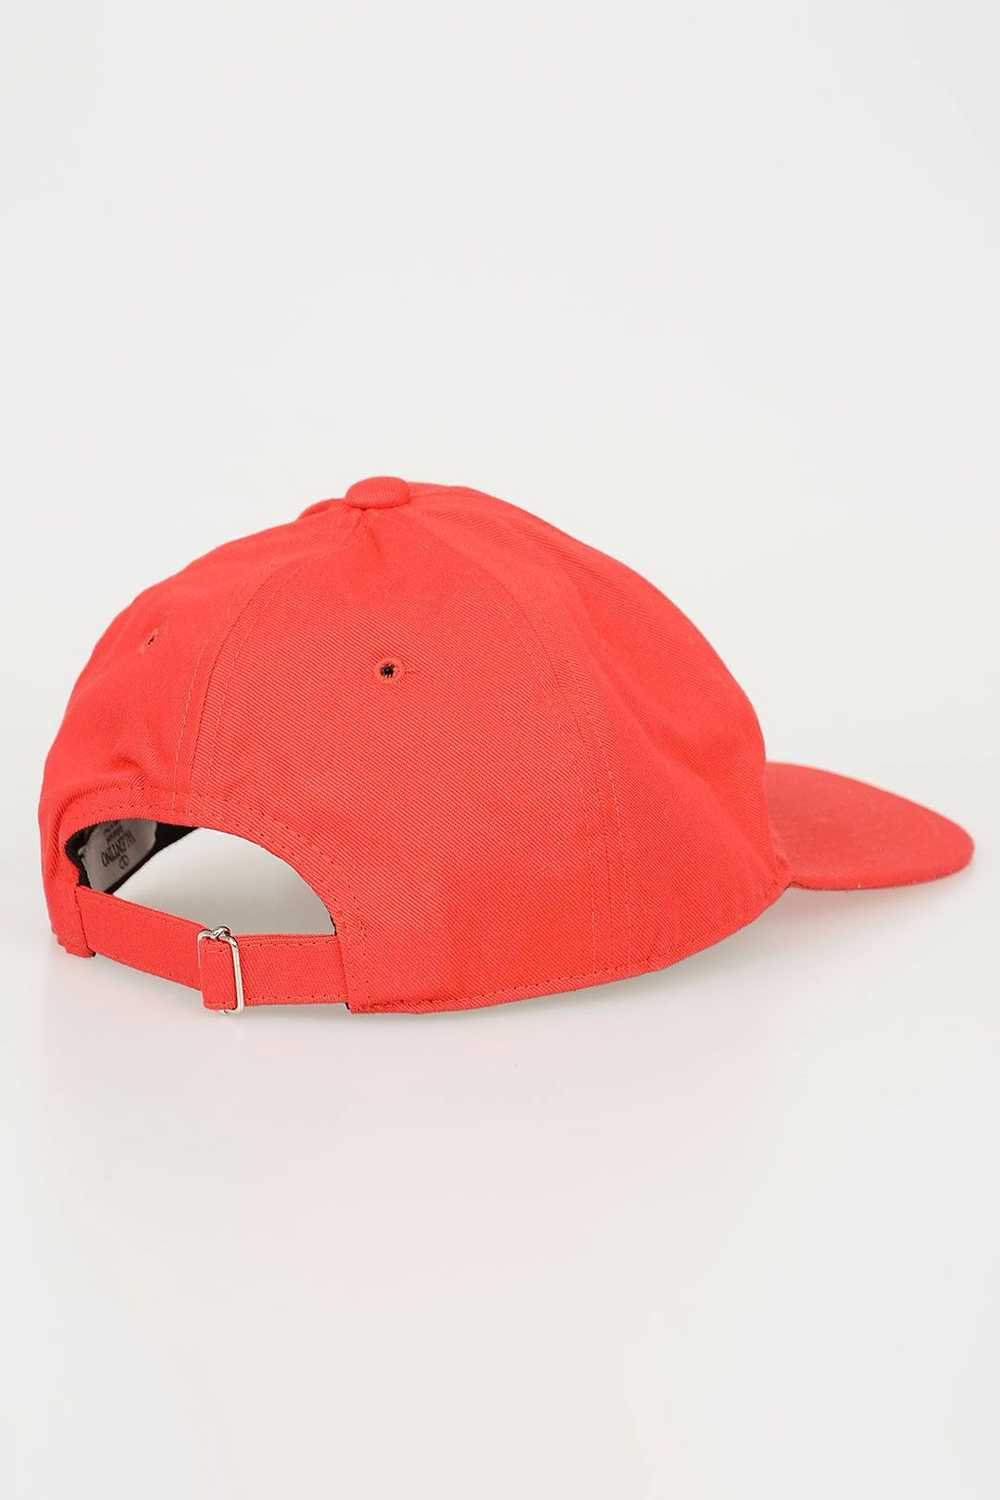 Valentino og1mm0524 Size-57 Baseball Hat in Red - image 2